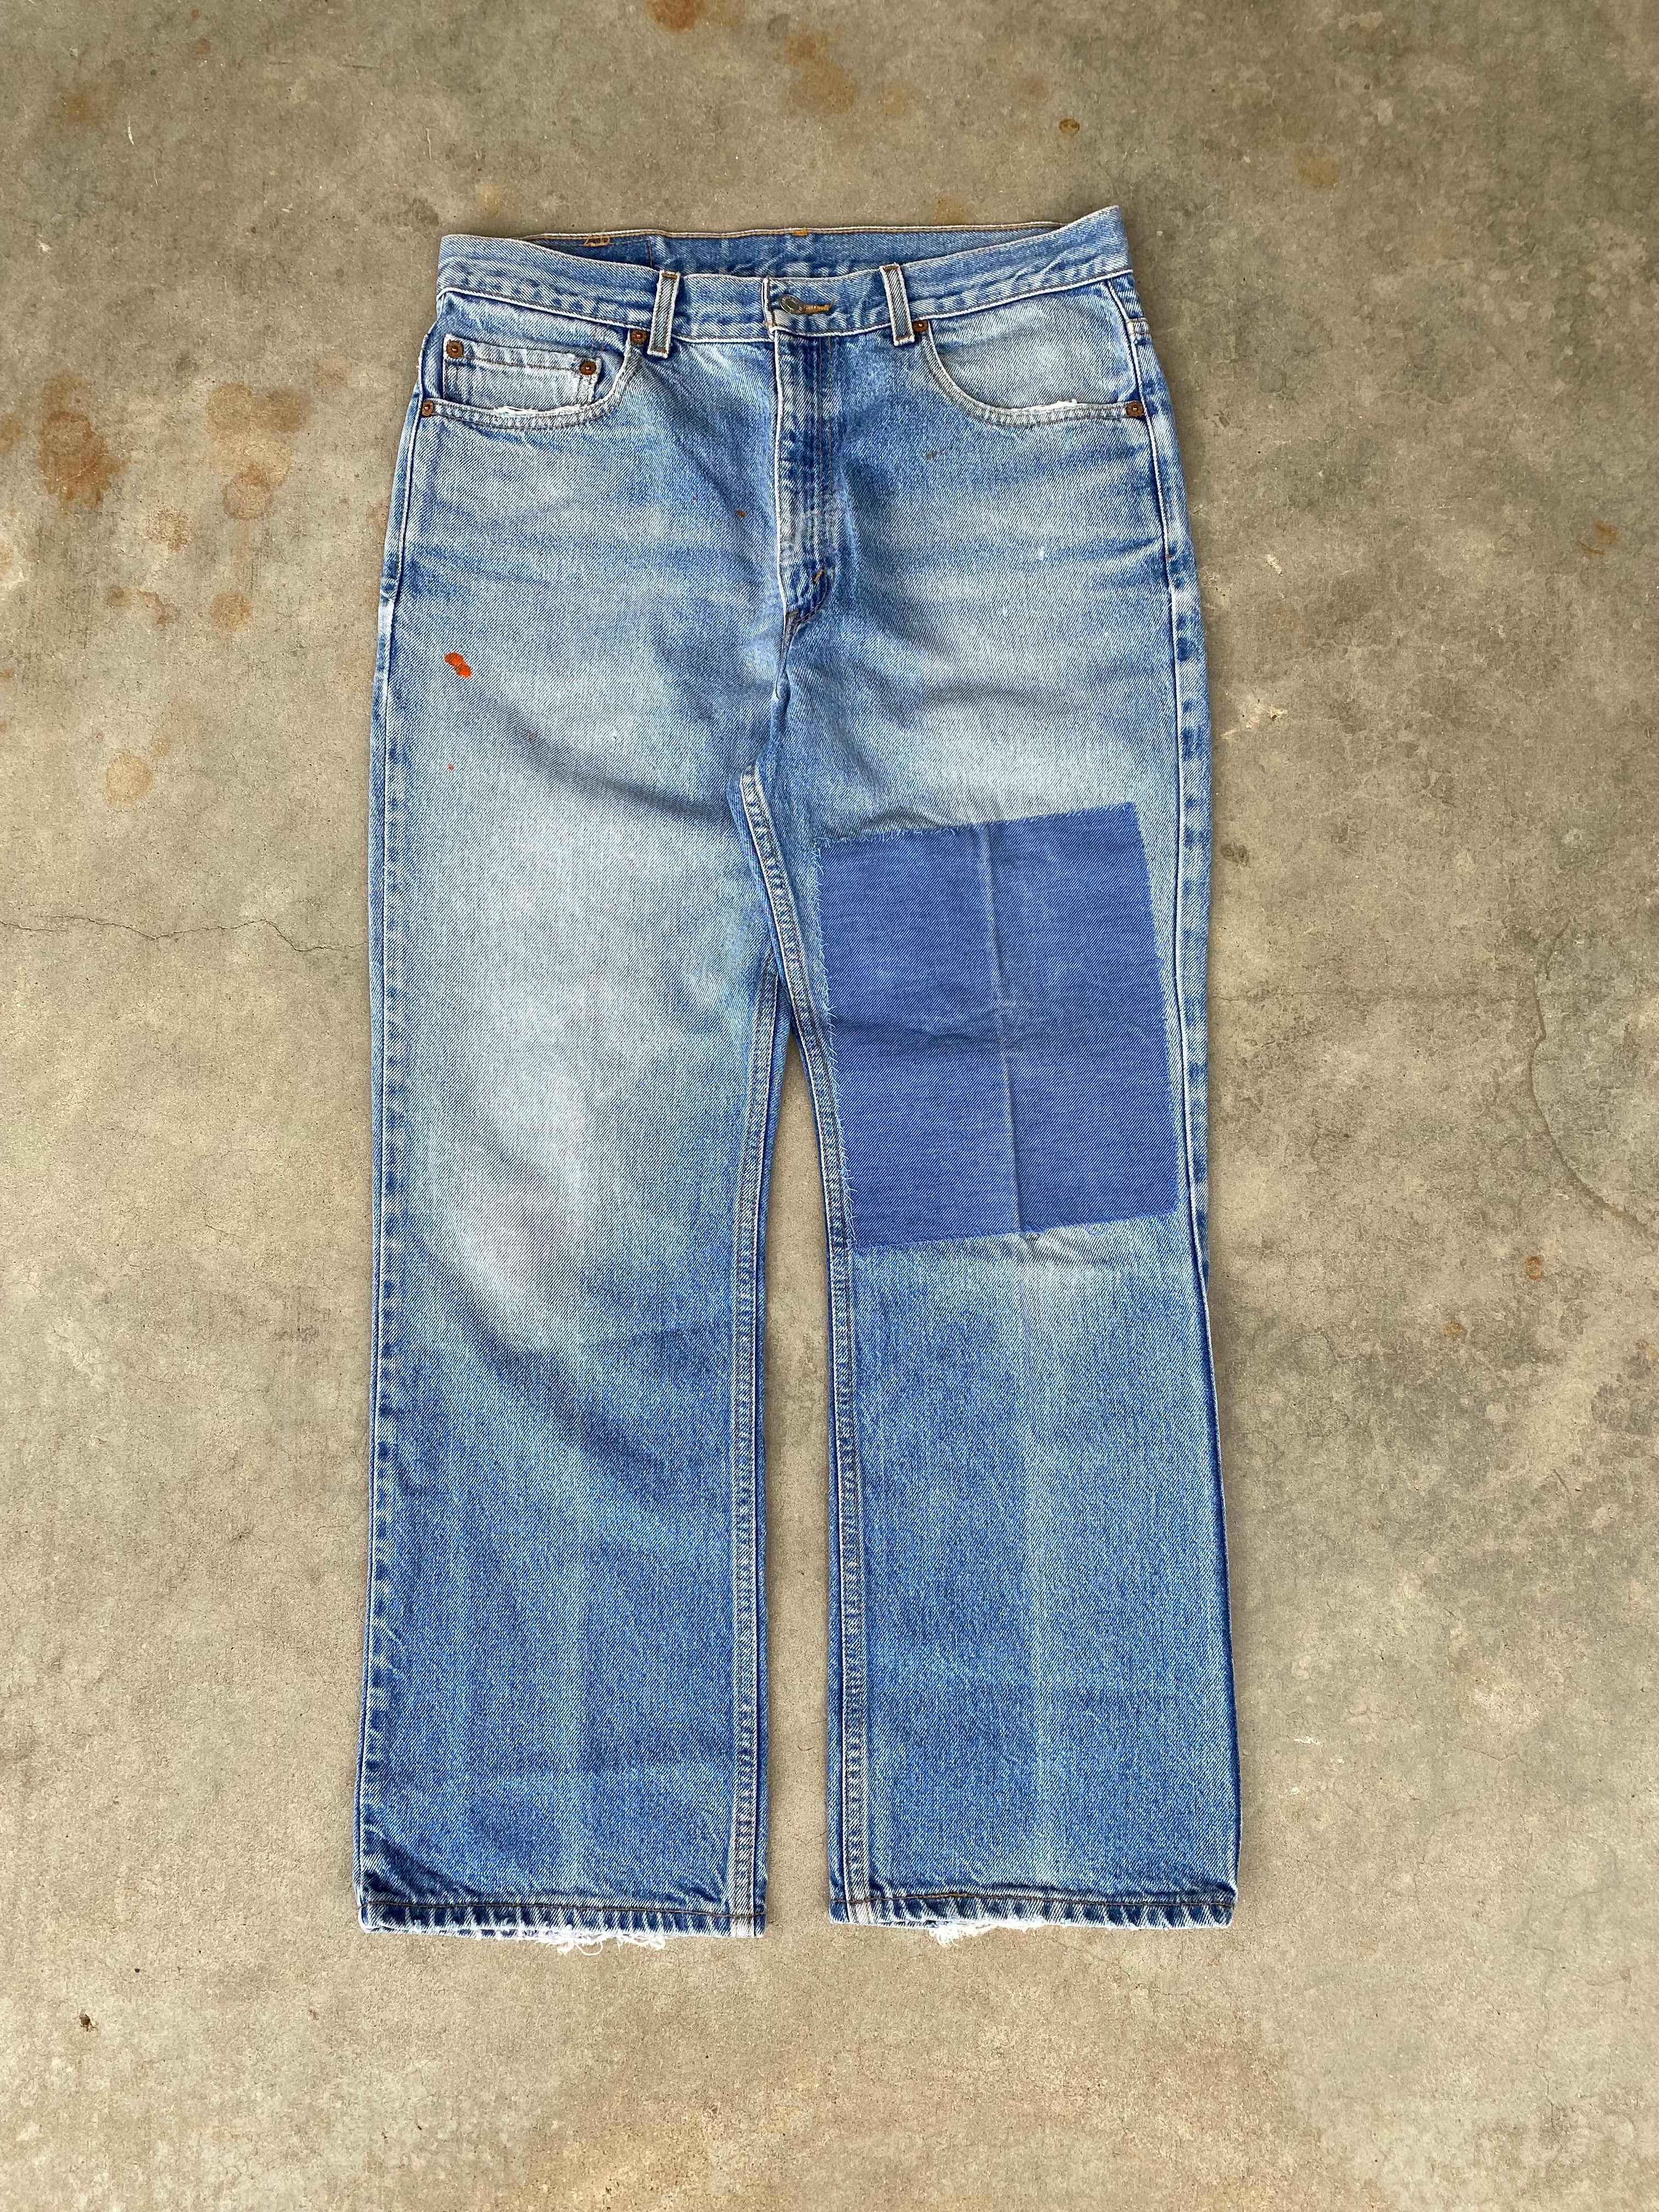 2000 Levi's 517 Patched Jeans (34"x28")